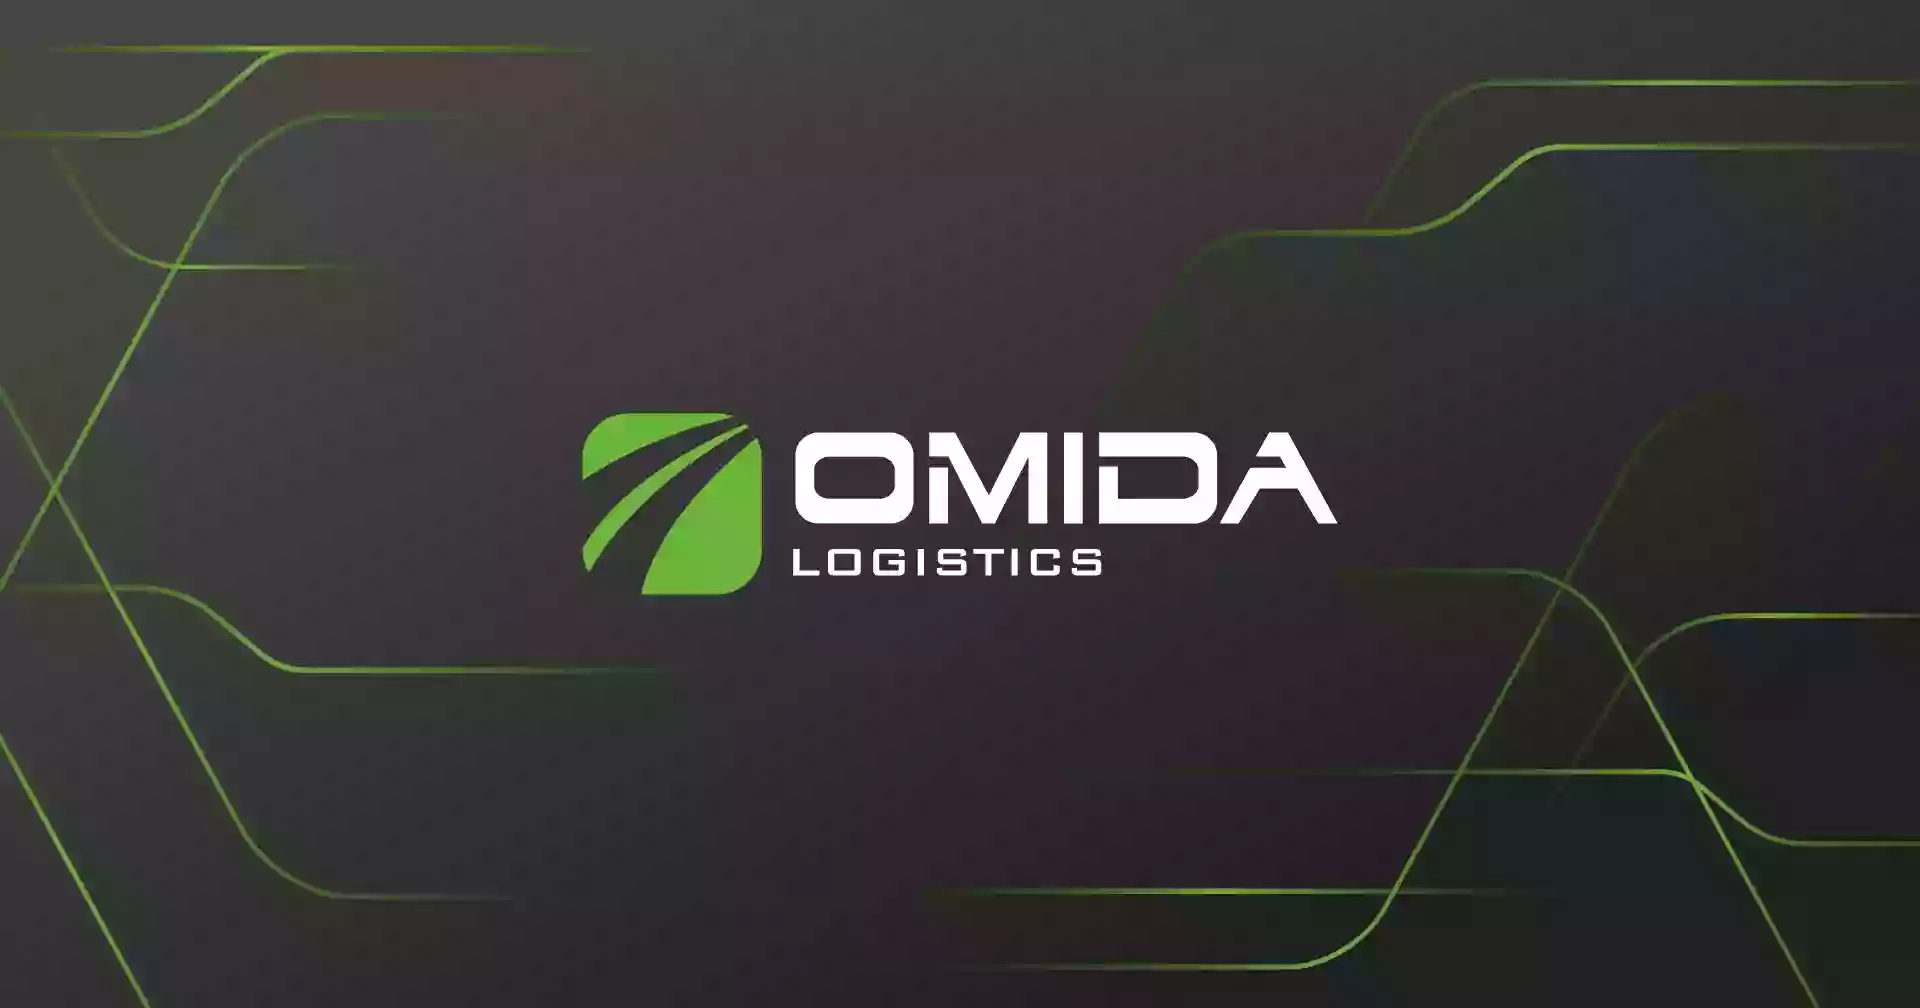 Omida Logistics